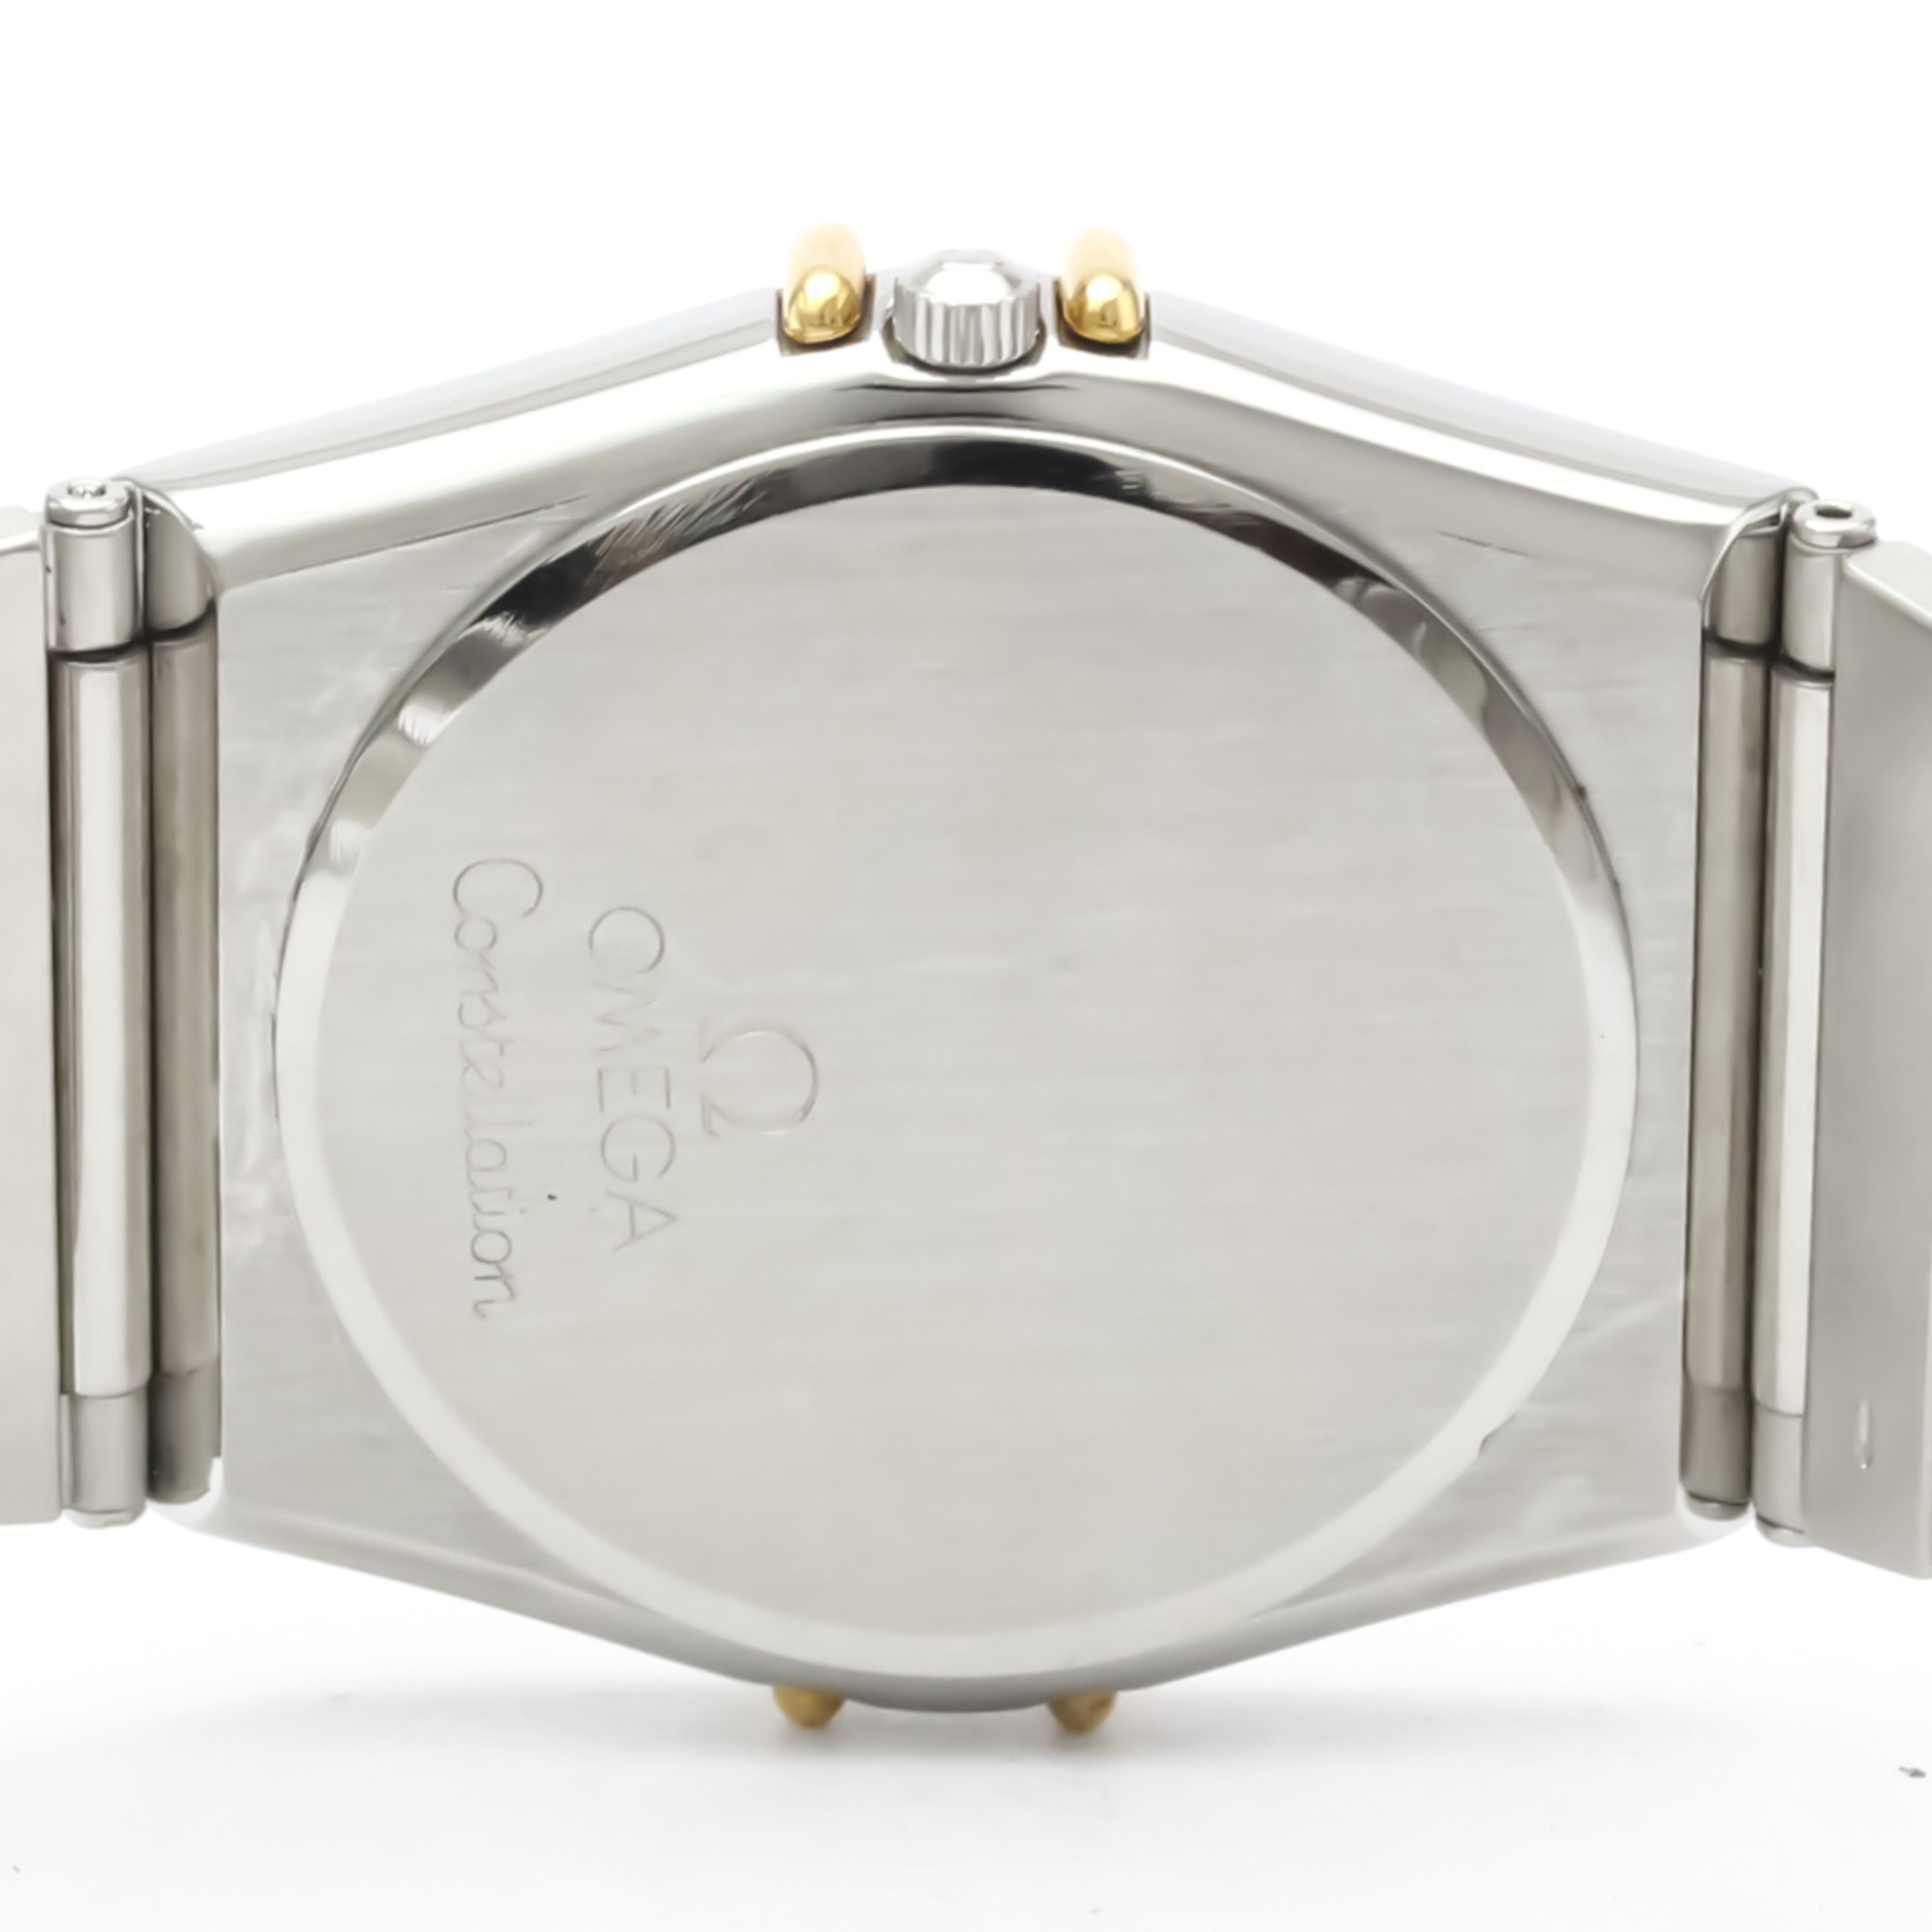 OMEGA Constellation 18K Gold Steel Quartz Watch 396.1070